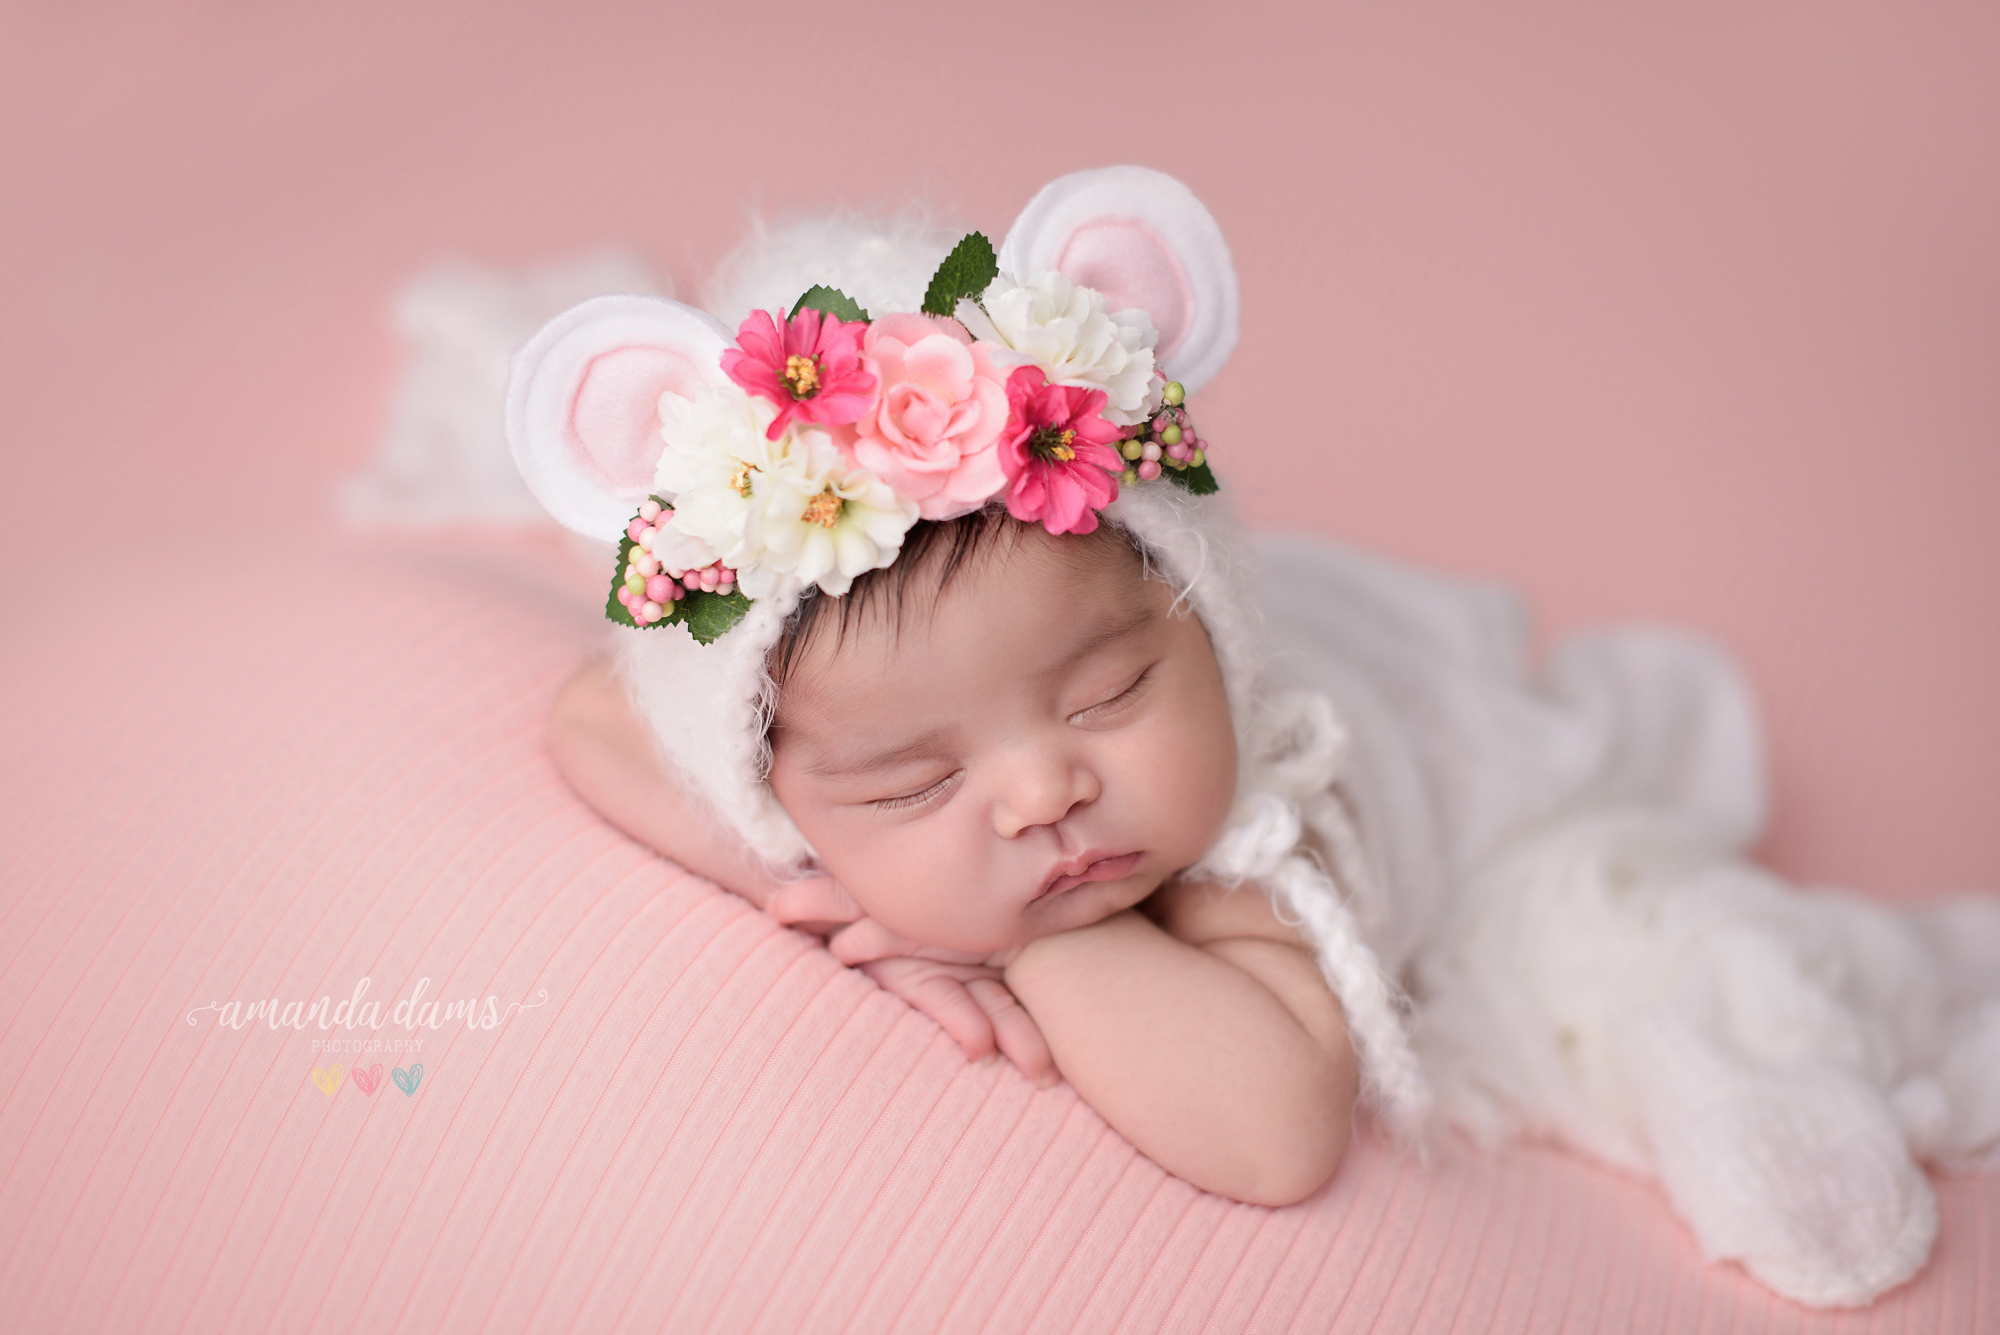 Newborn Photography Calgary Amanda Dams Photography Baby Amara Wearing Cute Headband